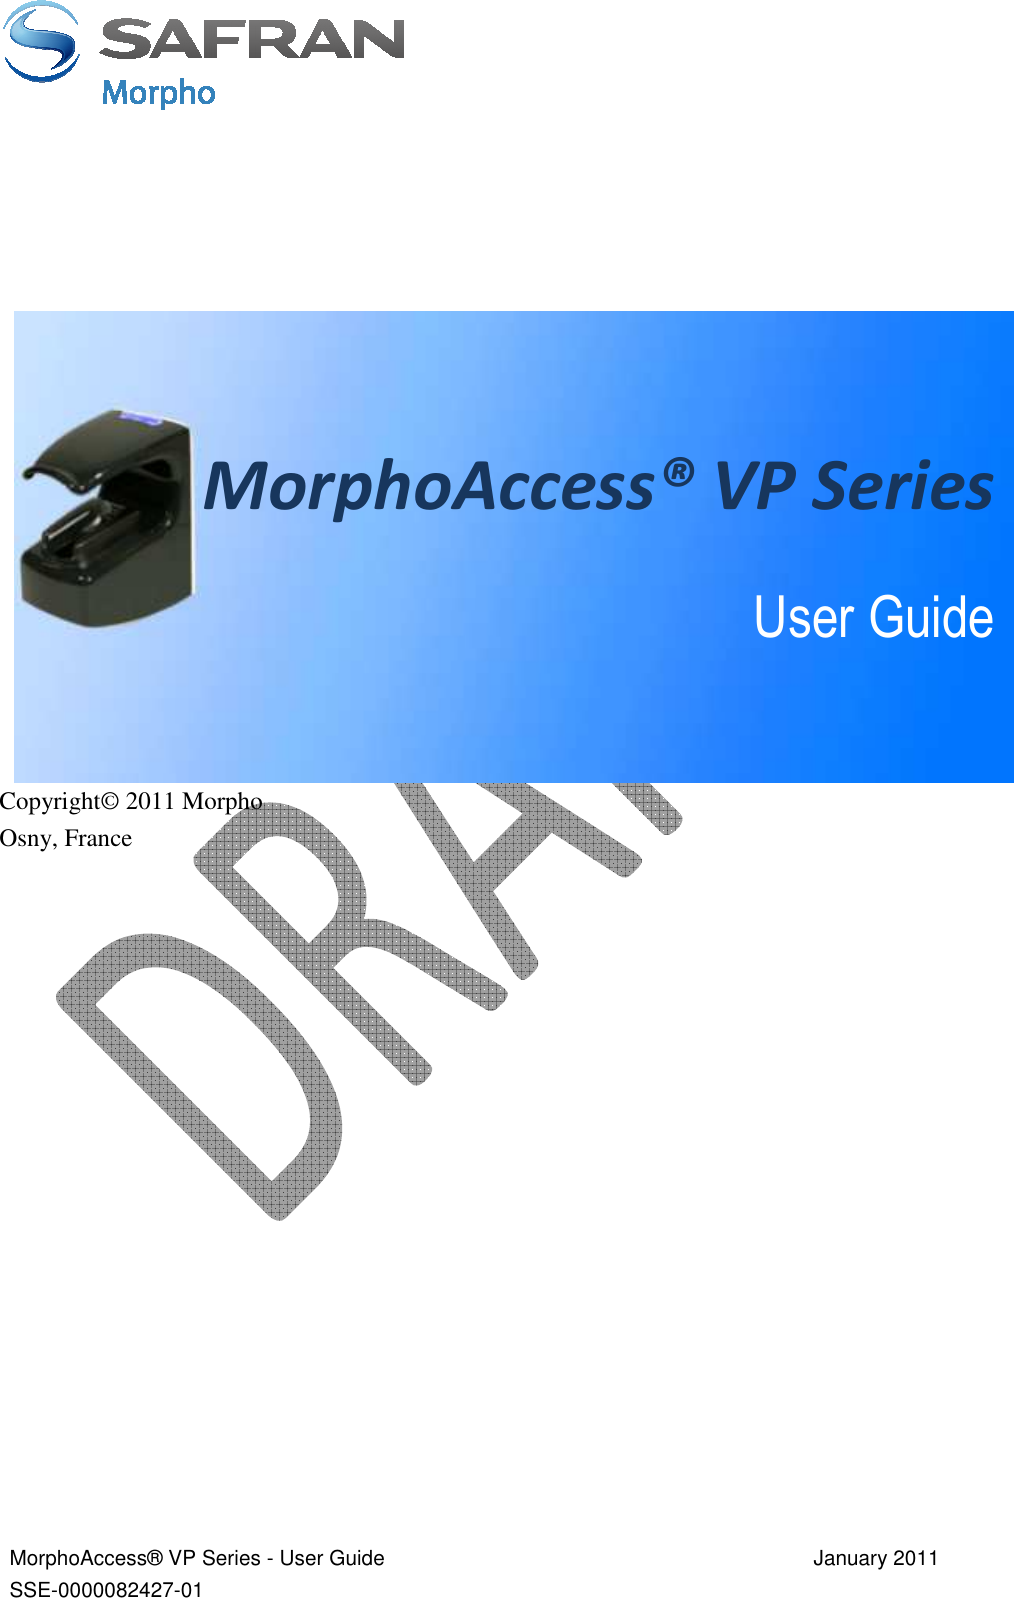  MorphoAccess® VP Series - User Guide  January 2011 SSE-0000082427-01                     Copyright© 2011 Morpho Osny, France           MorphoAccess® VP Series  User Guide 